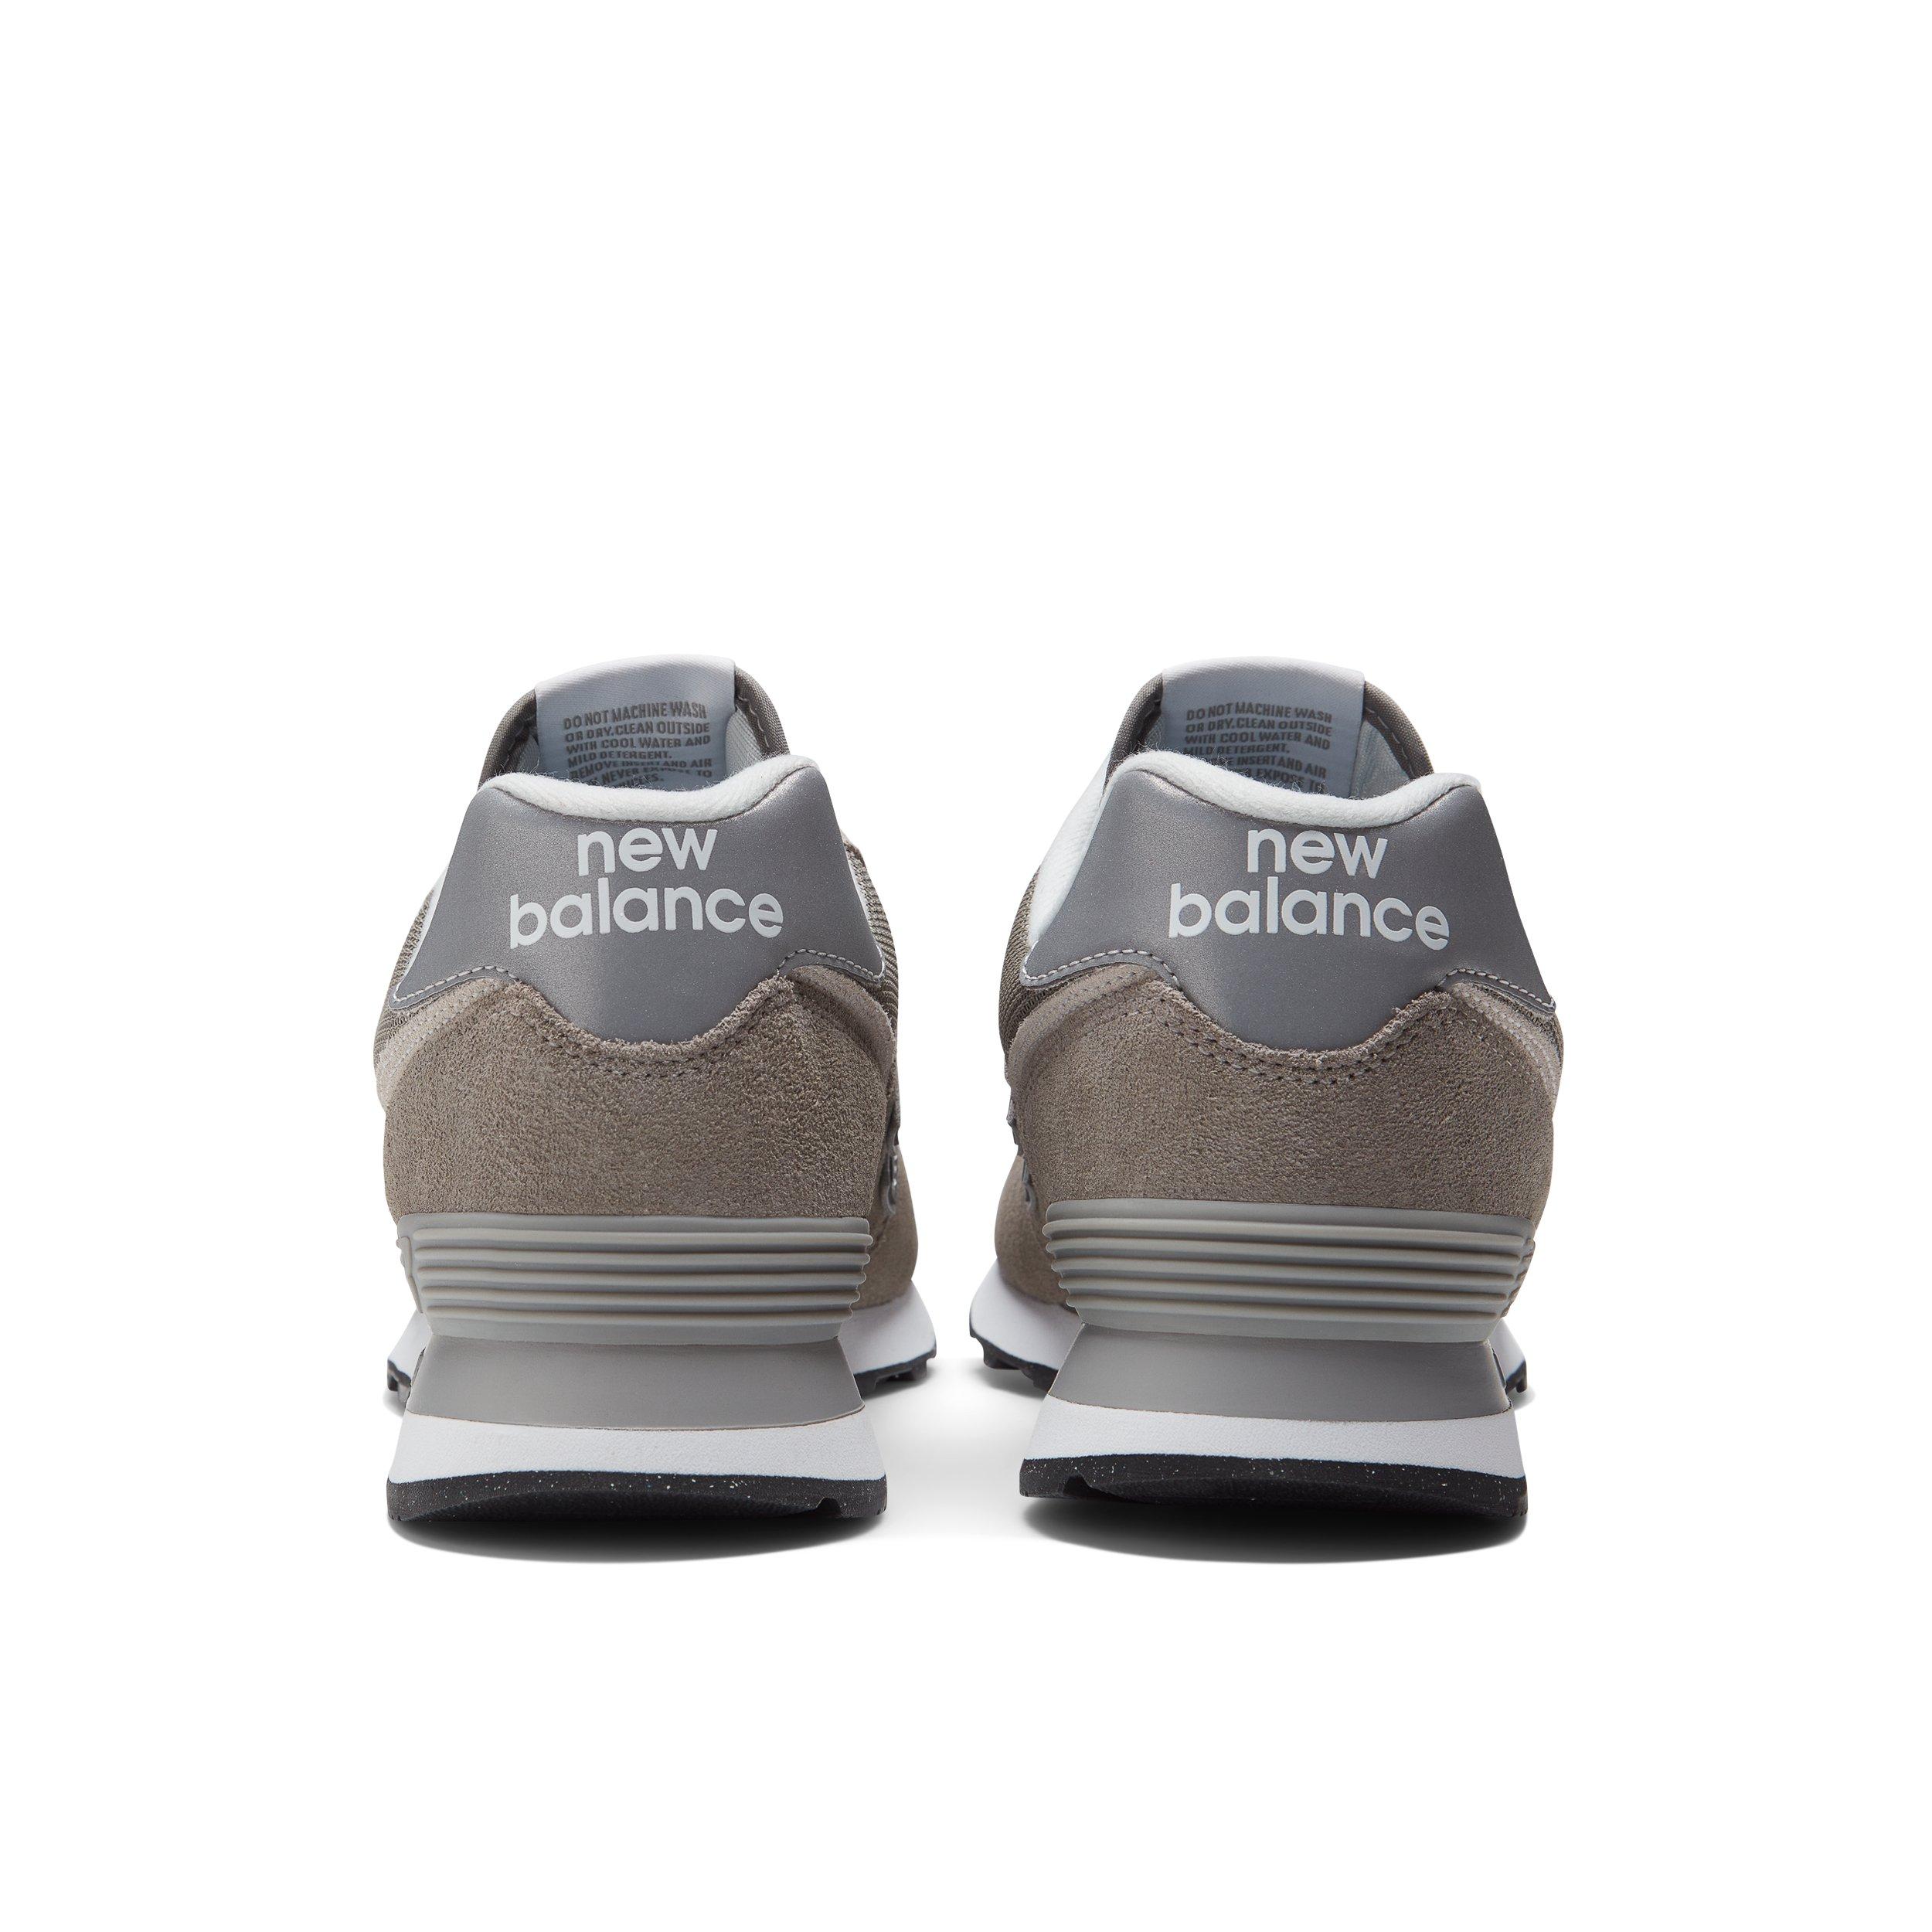 NewBalance 574 trainers in grey